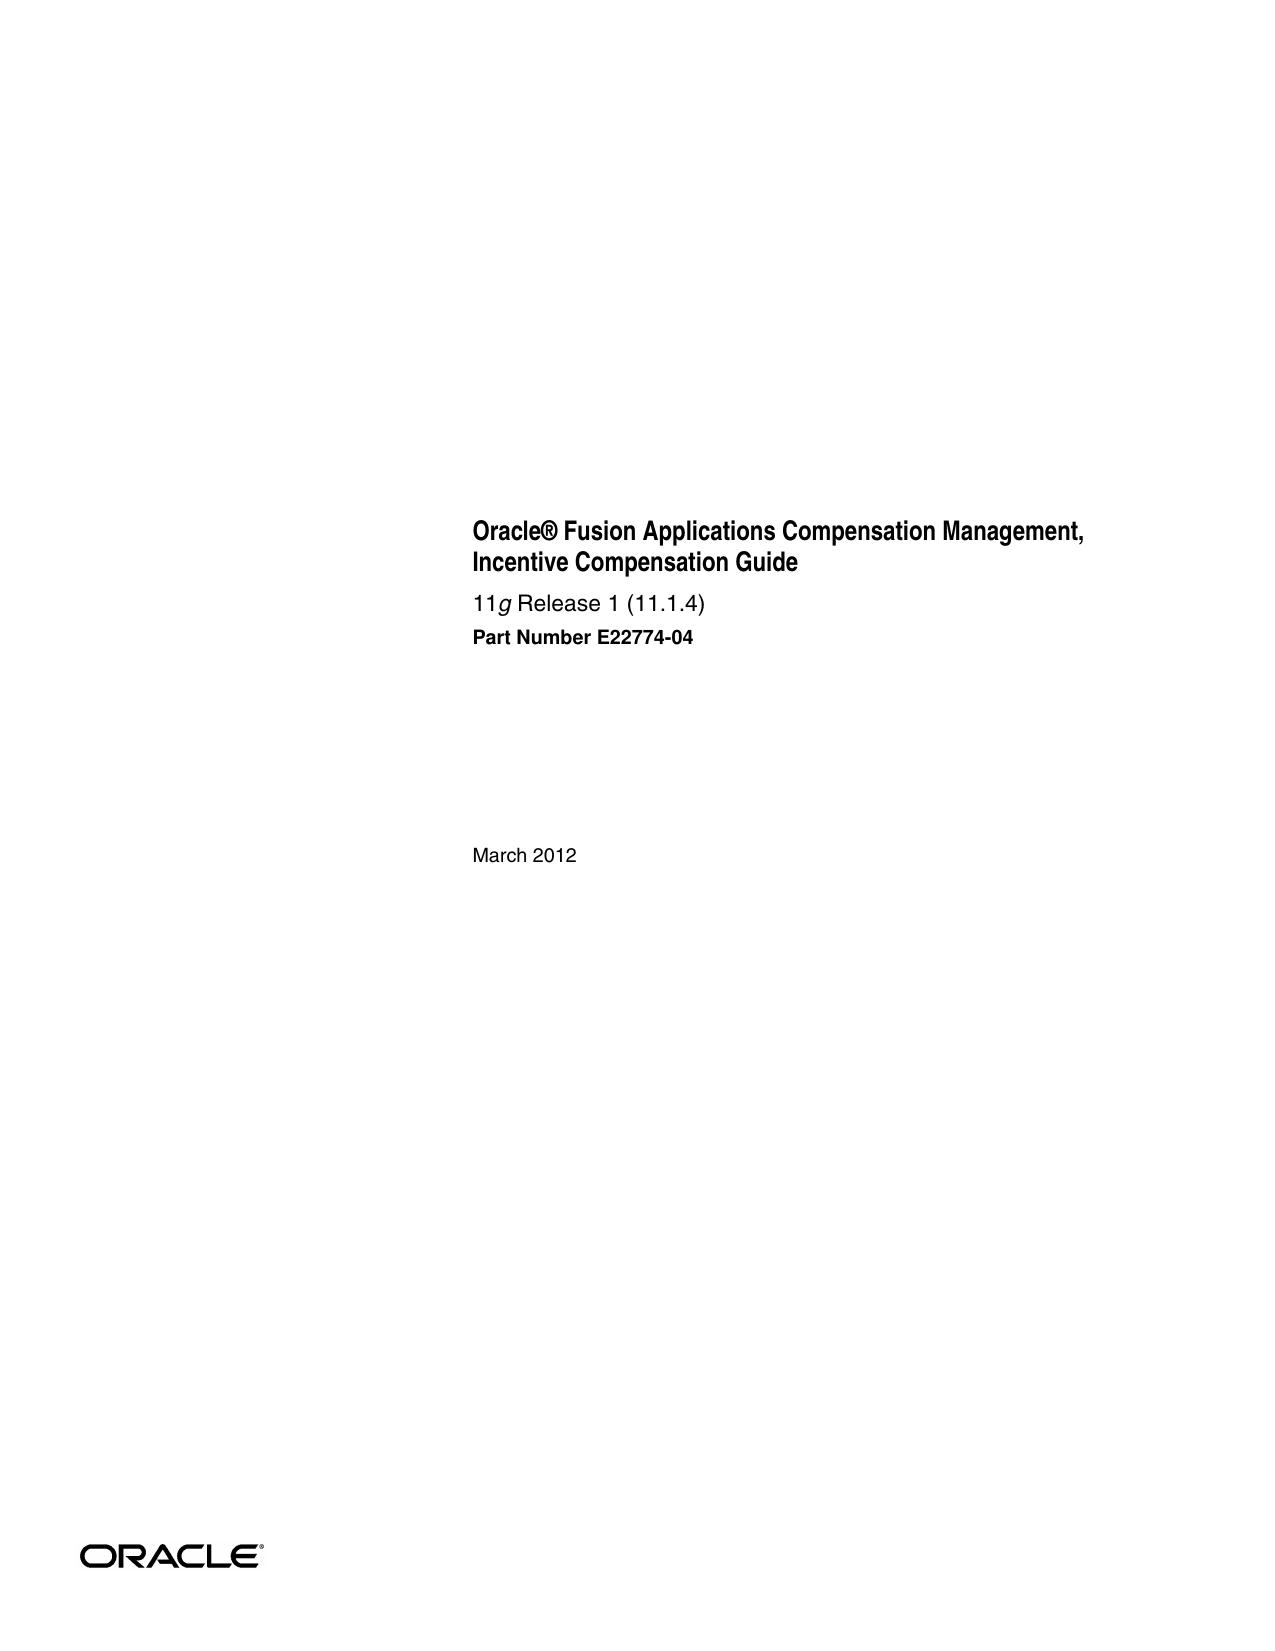 Oracle® Fusion Applications Compensation Management, Incentive Compensation Guide 2012